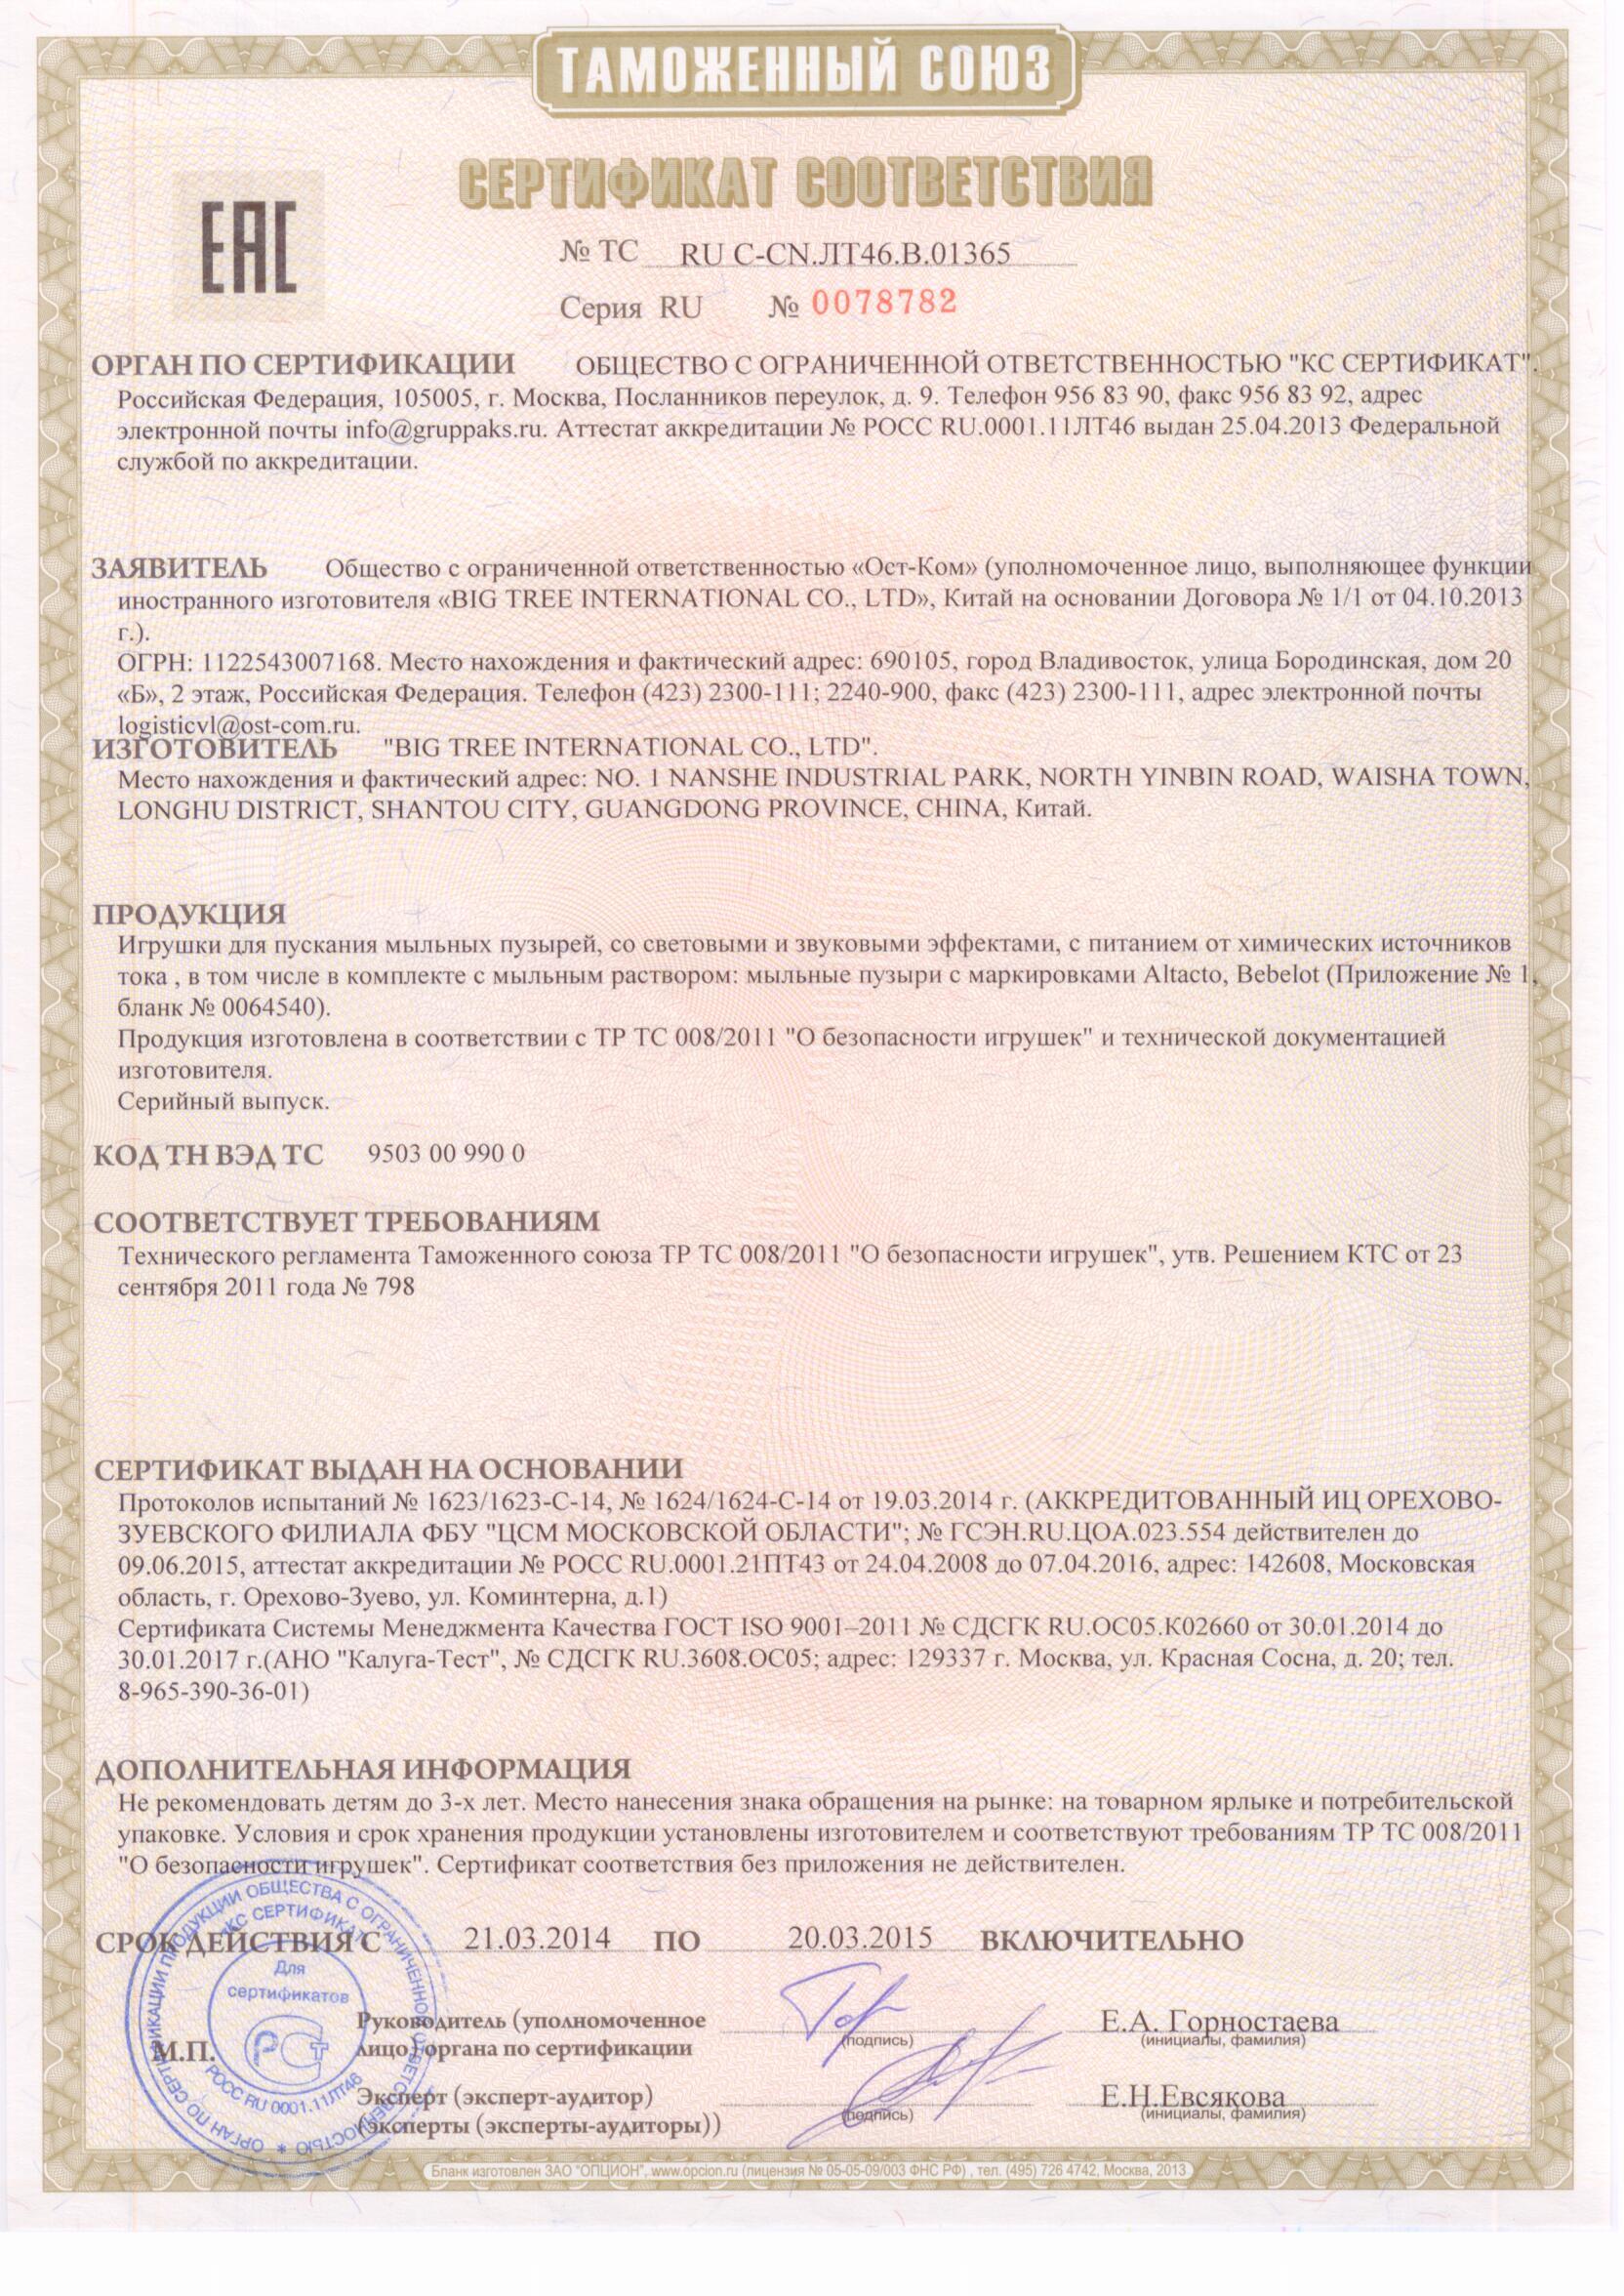 RU C-CN.ЛТ46.B.01365: /images/certificates/RU-C-CN.LT46.B.01365.jpg